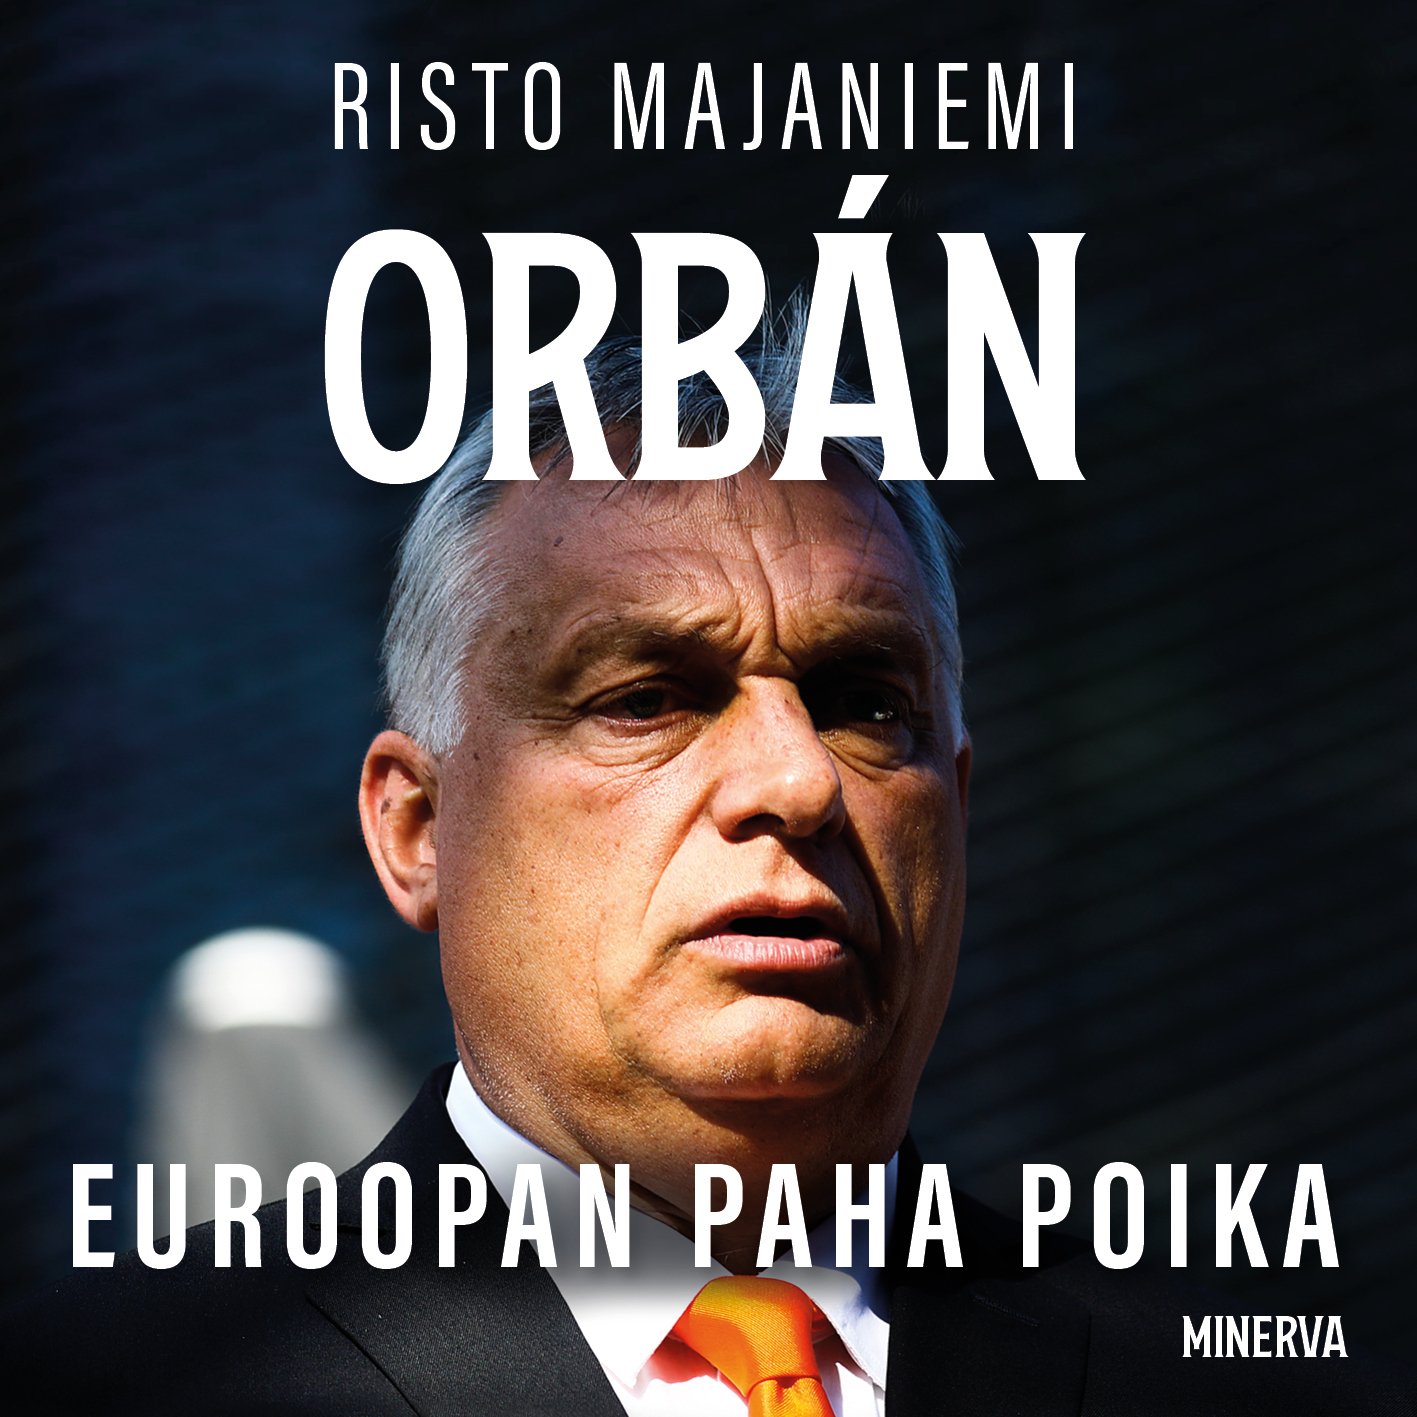 Majaniemi, Risto - Orbán - Euroopan paha poika, audiobook